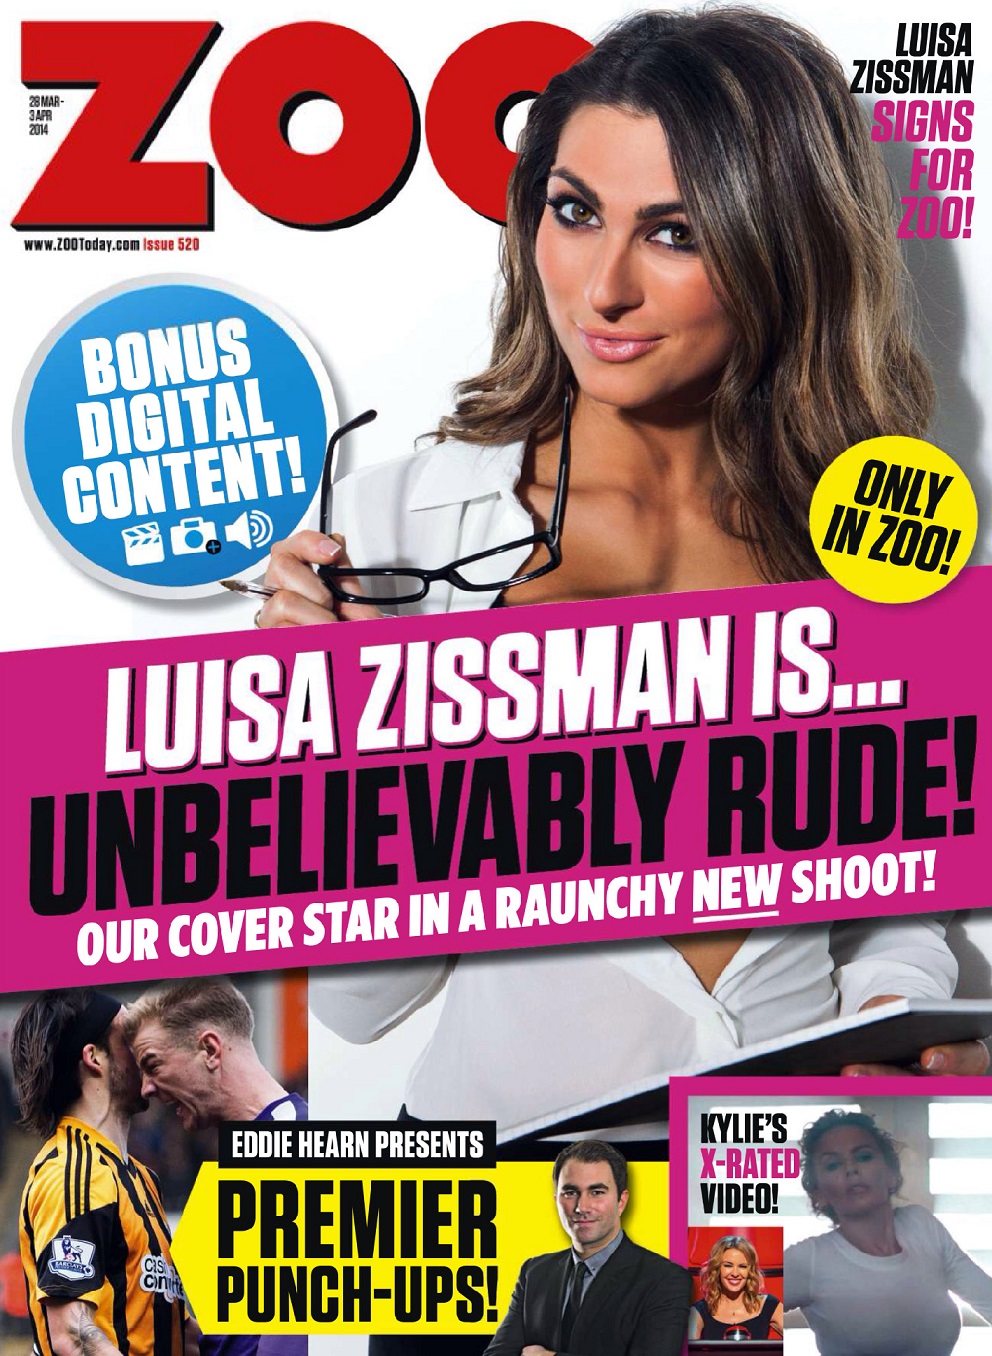 Luisa Zissman is “Unbelievably Rude” for Zoo Magazine